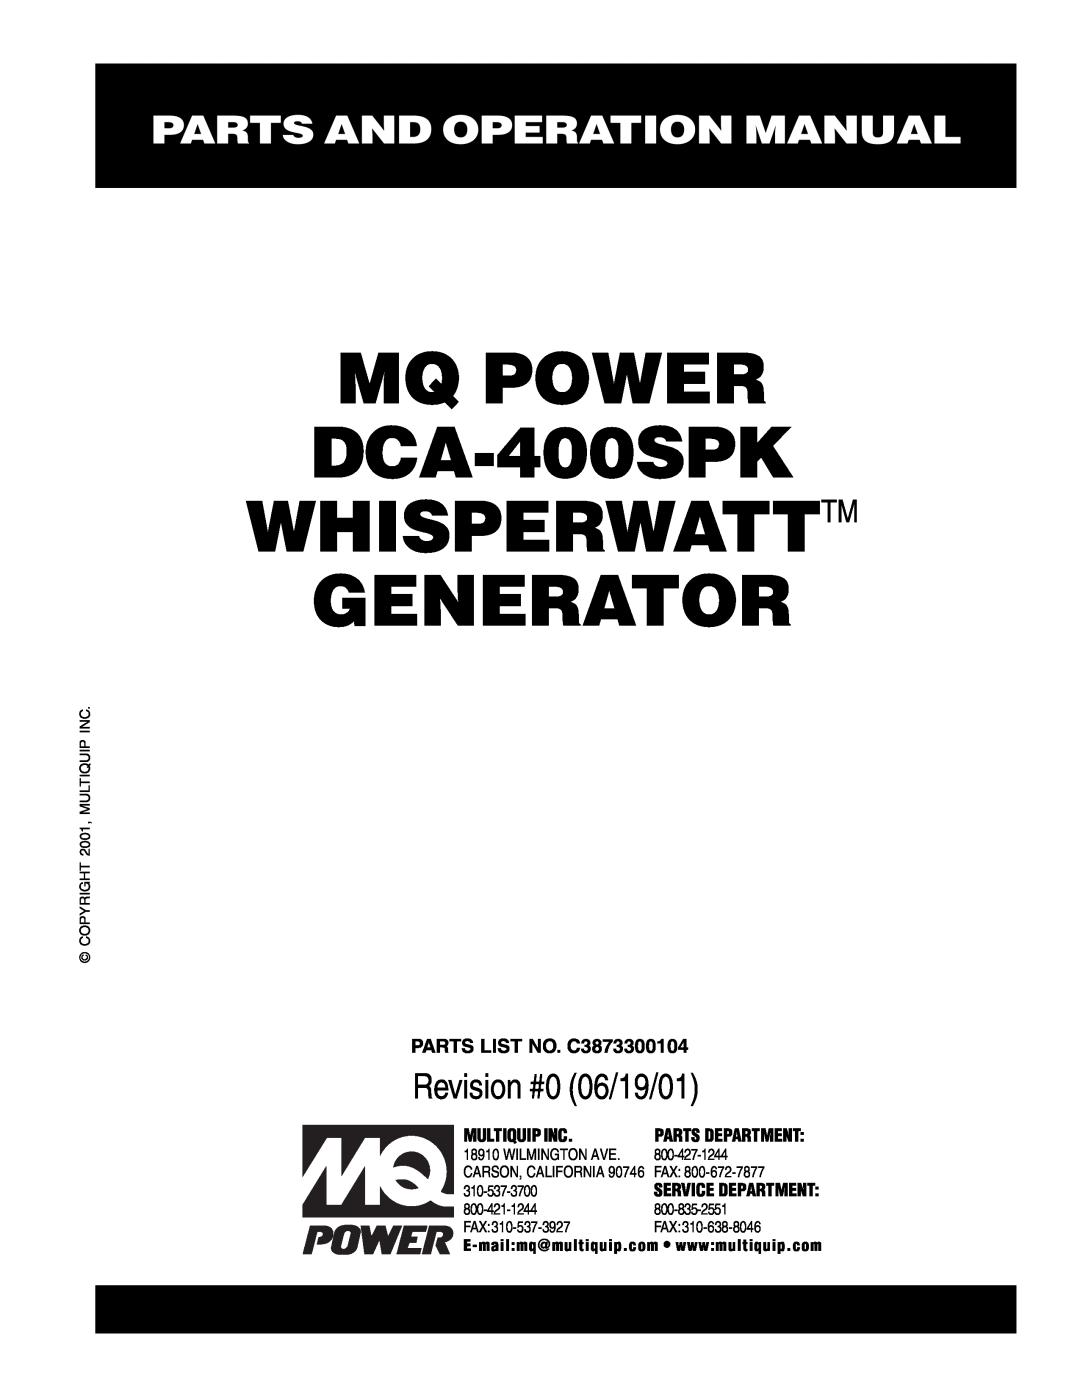 Multiquip operation manual Parts And Operation Manual, MQ POWER DCA-400SPK WHISPERWATTTM GENERATOR, Multiquip Inc 